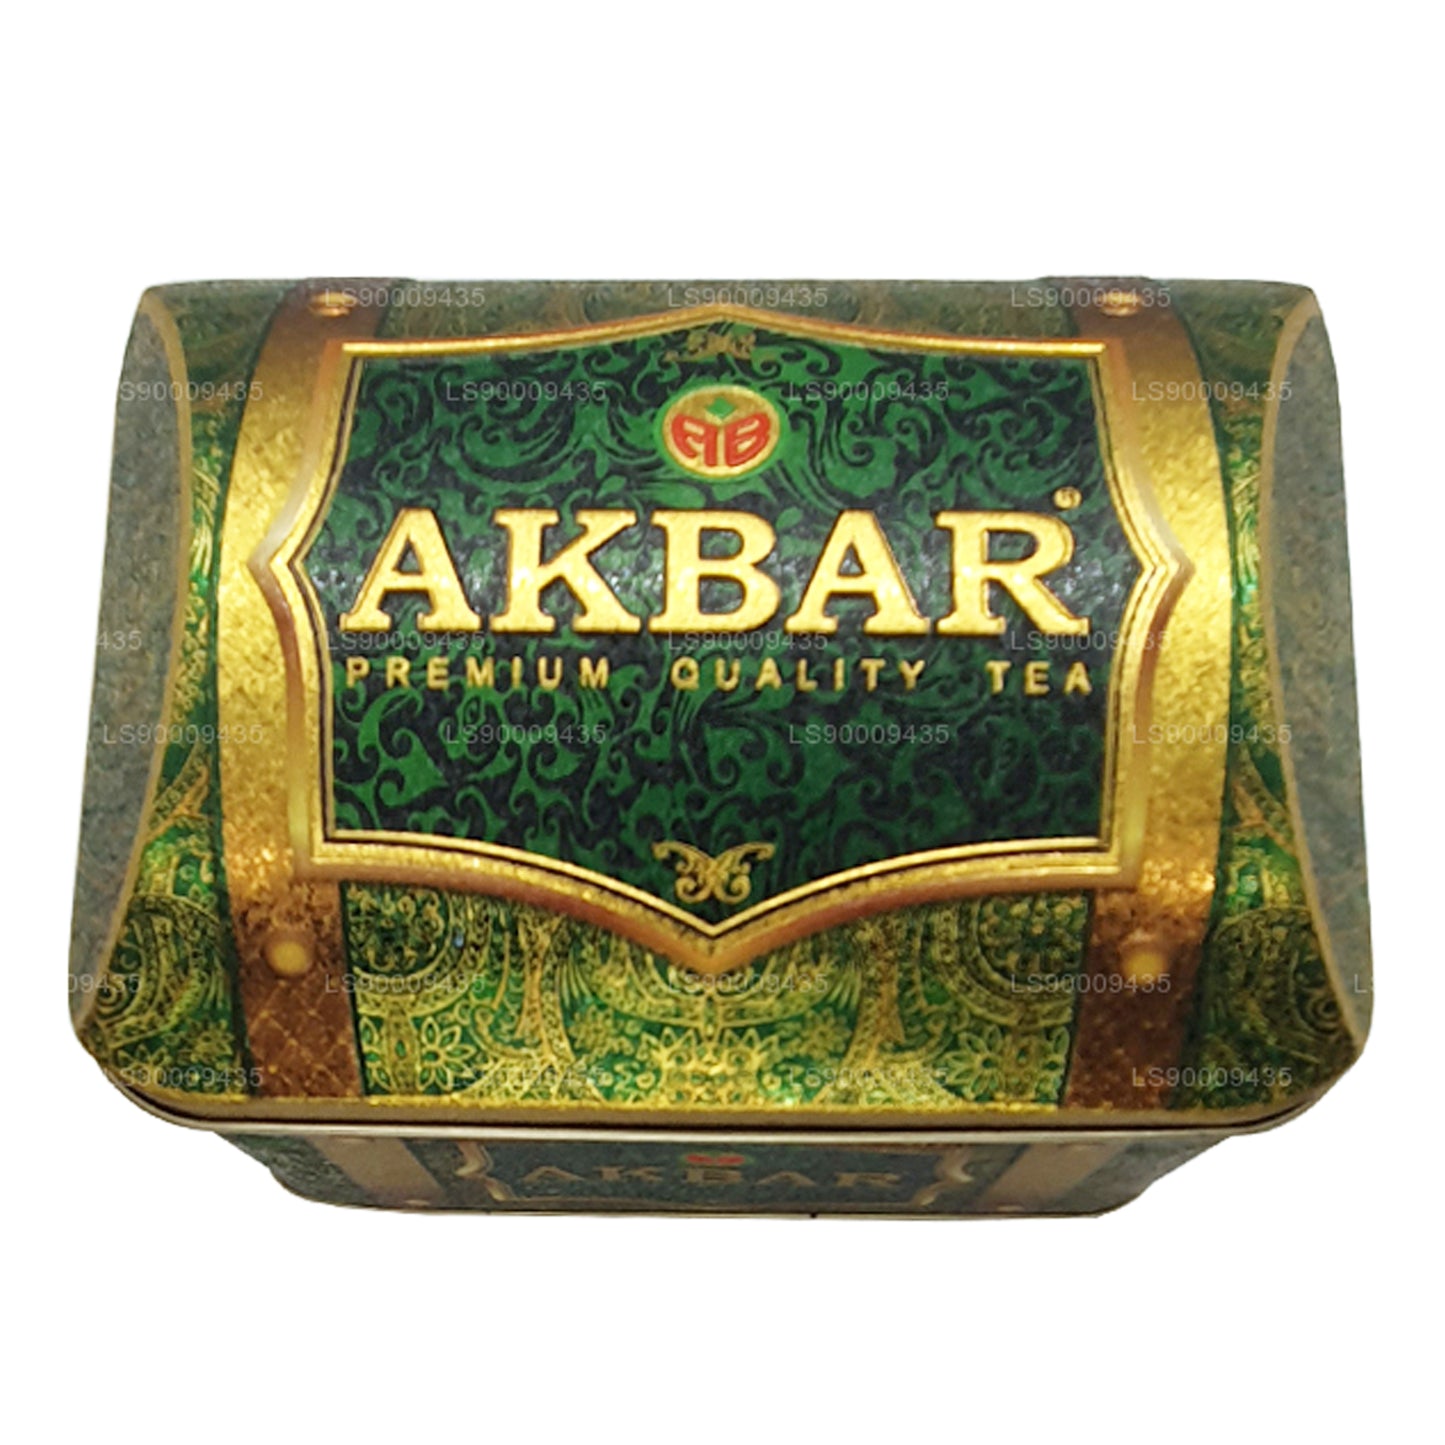 Akbar eksklusiivne kollektsioon Rich Soursop Treasure Box (250g)